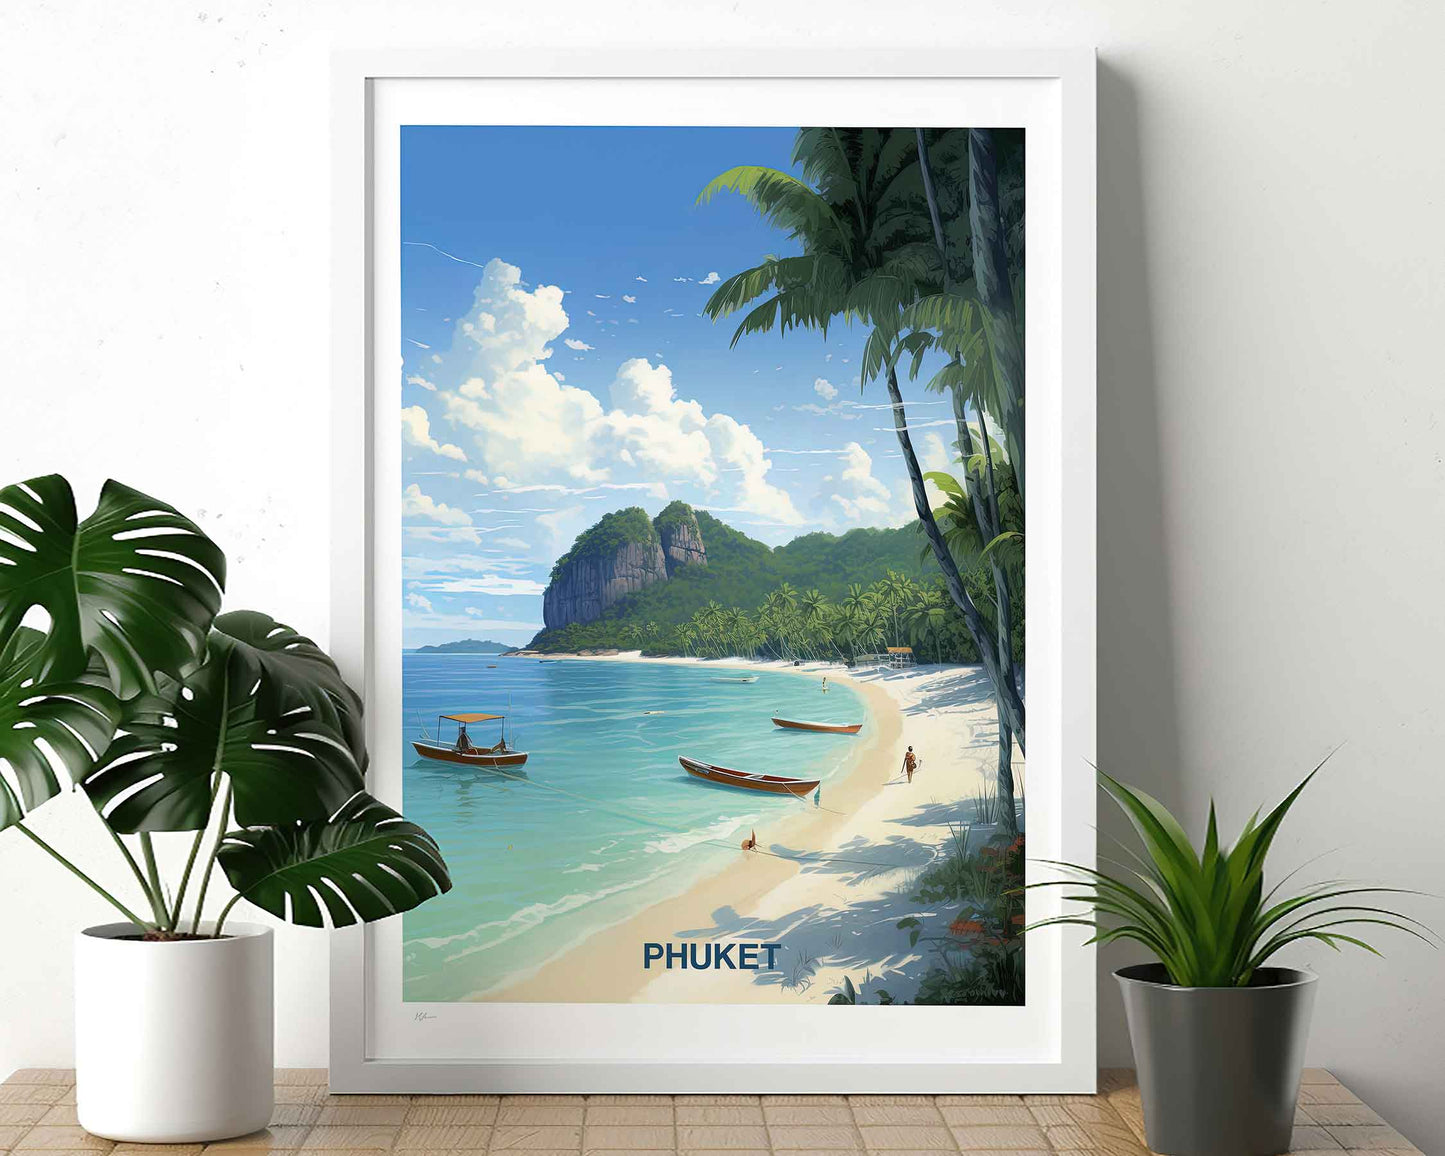 Framed Image of Phuket Thailand Wall Art Travel Poster Prints Illustration